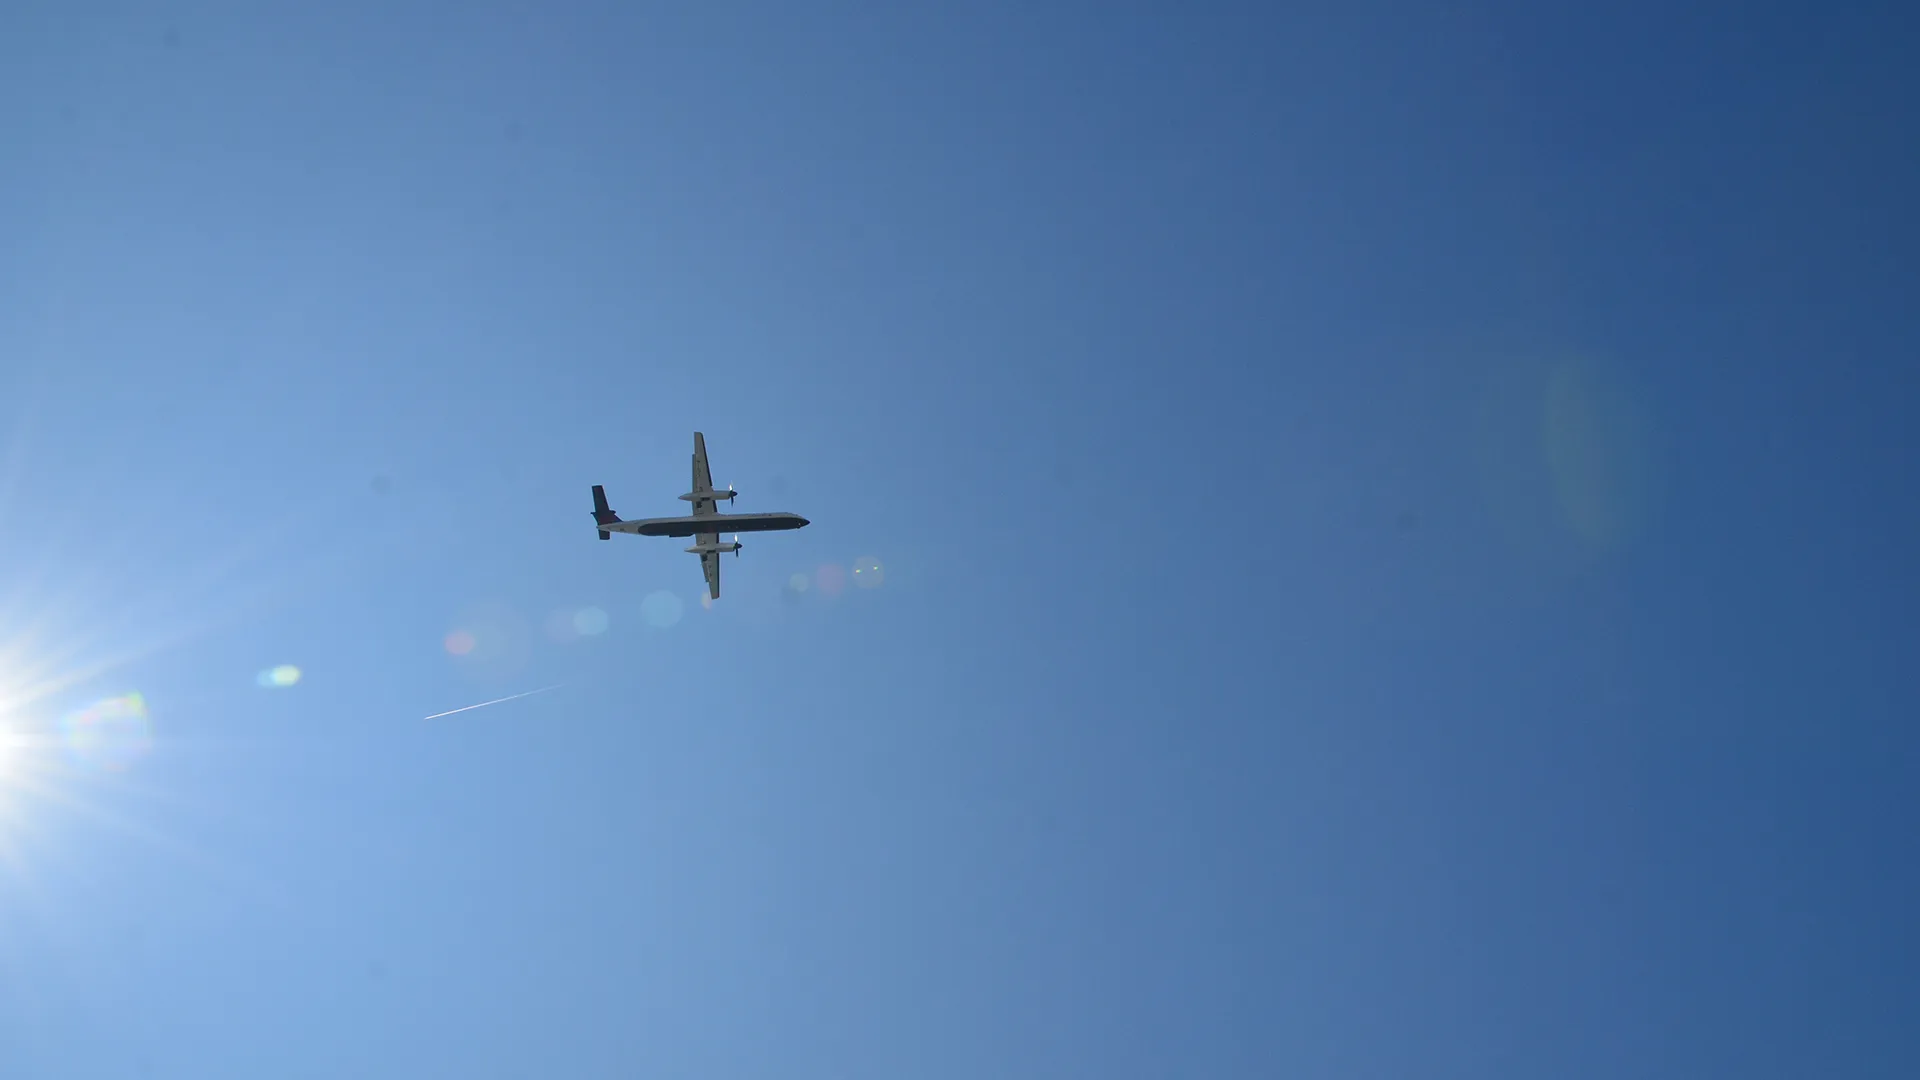 Airplane in a bright blue sky